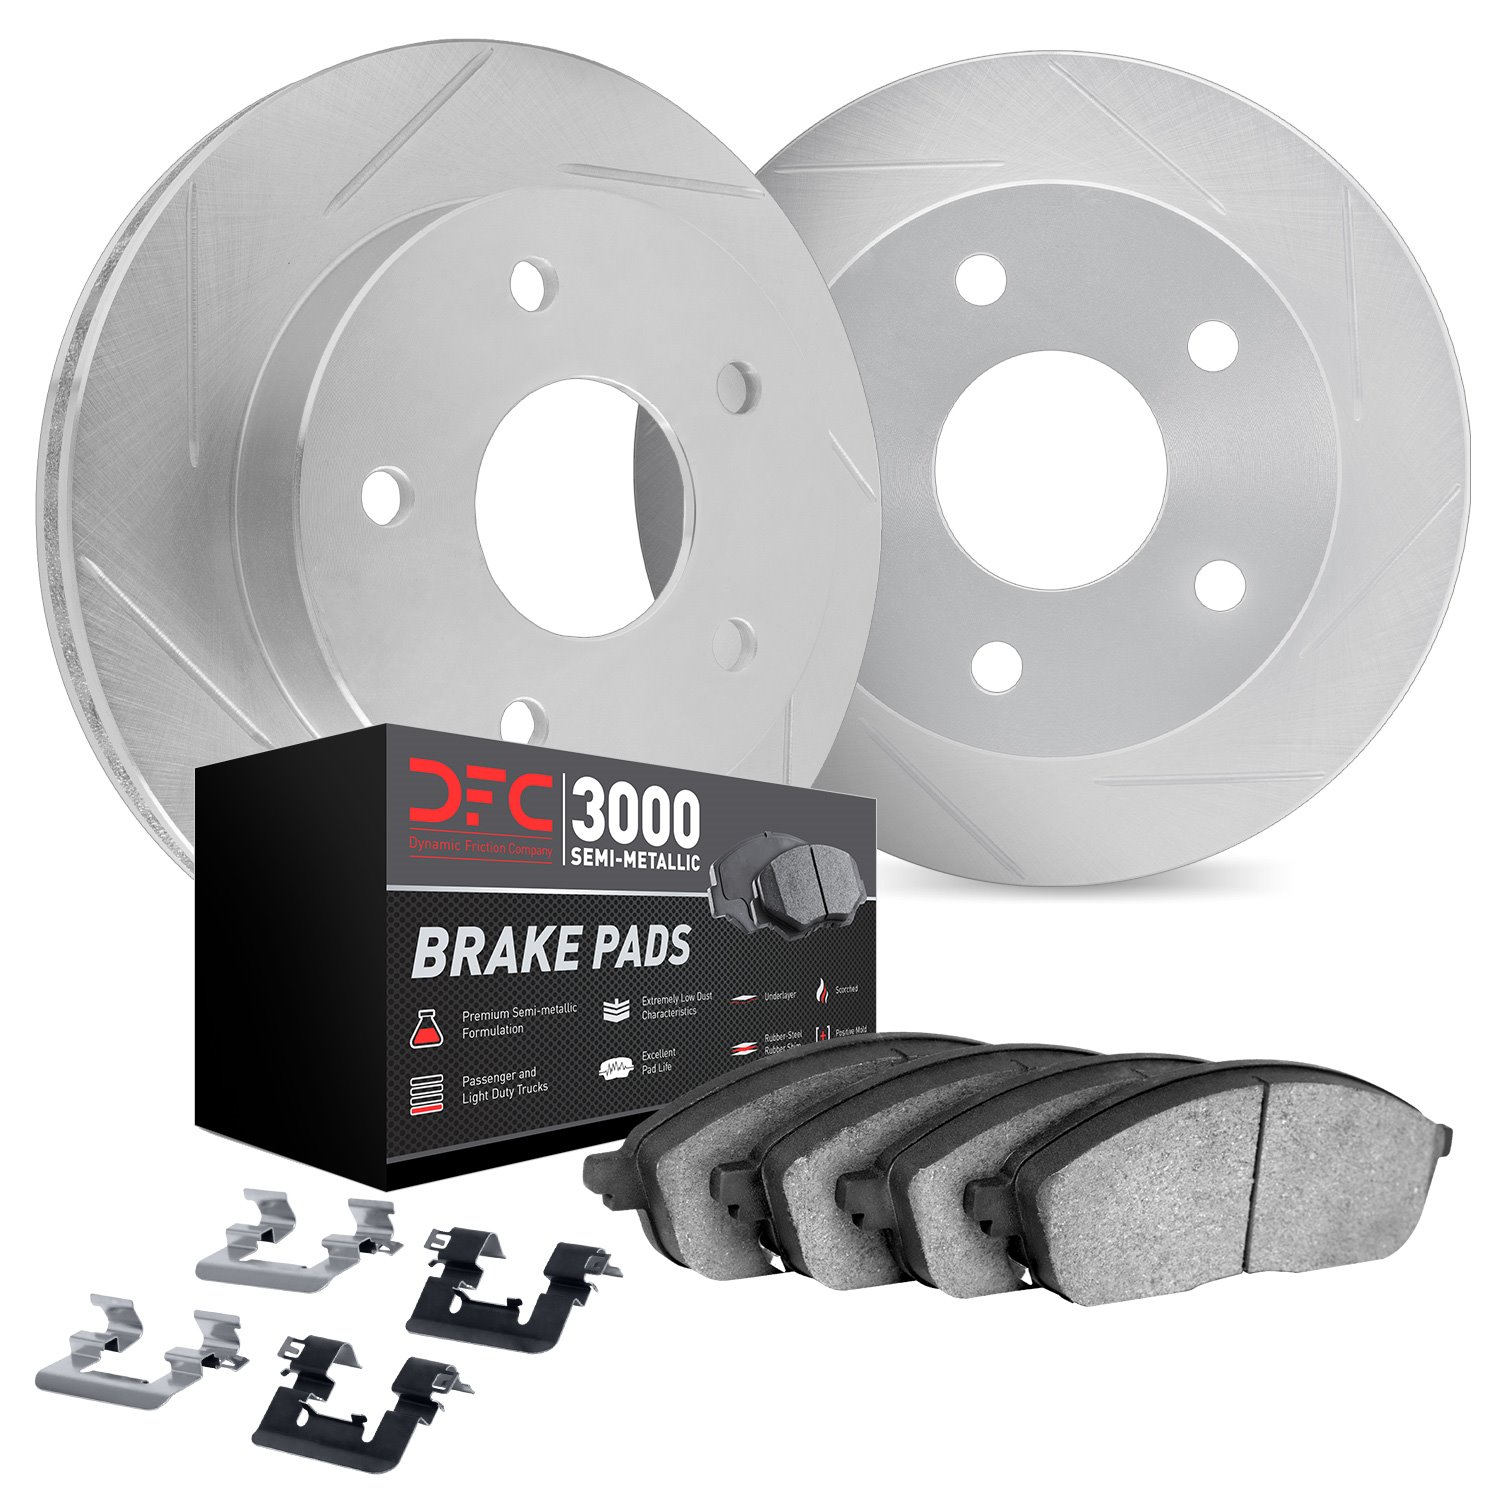 5112-27073 Slotted Brake Rotors with 3000-Series Semi-Metallic Brake Pads Kit & Hardware [Silver], Fits Select Multiple Makes/Mo